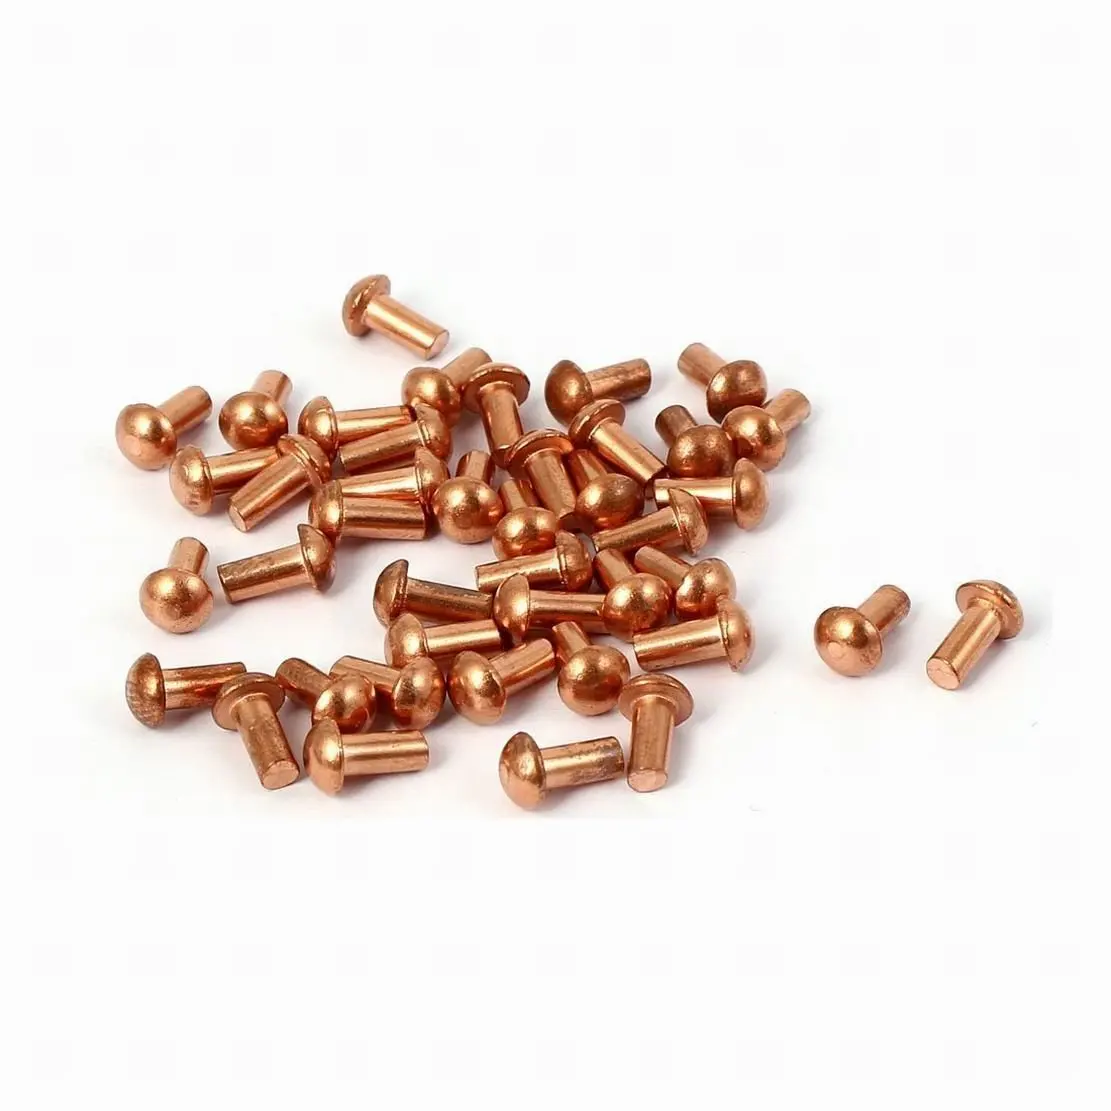 Cheap Copper Rivets Find Copper Rivets Deals On Line At